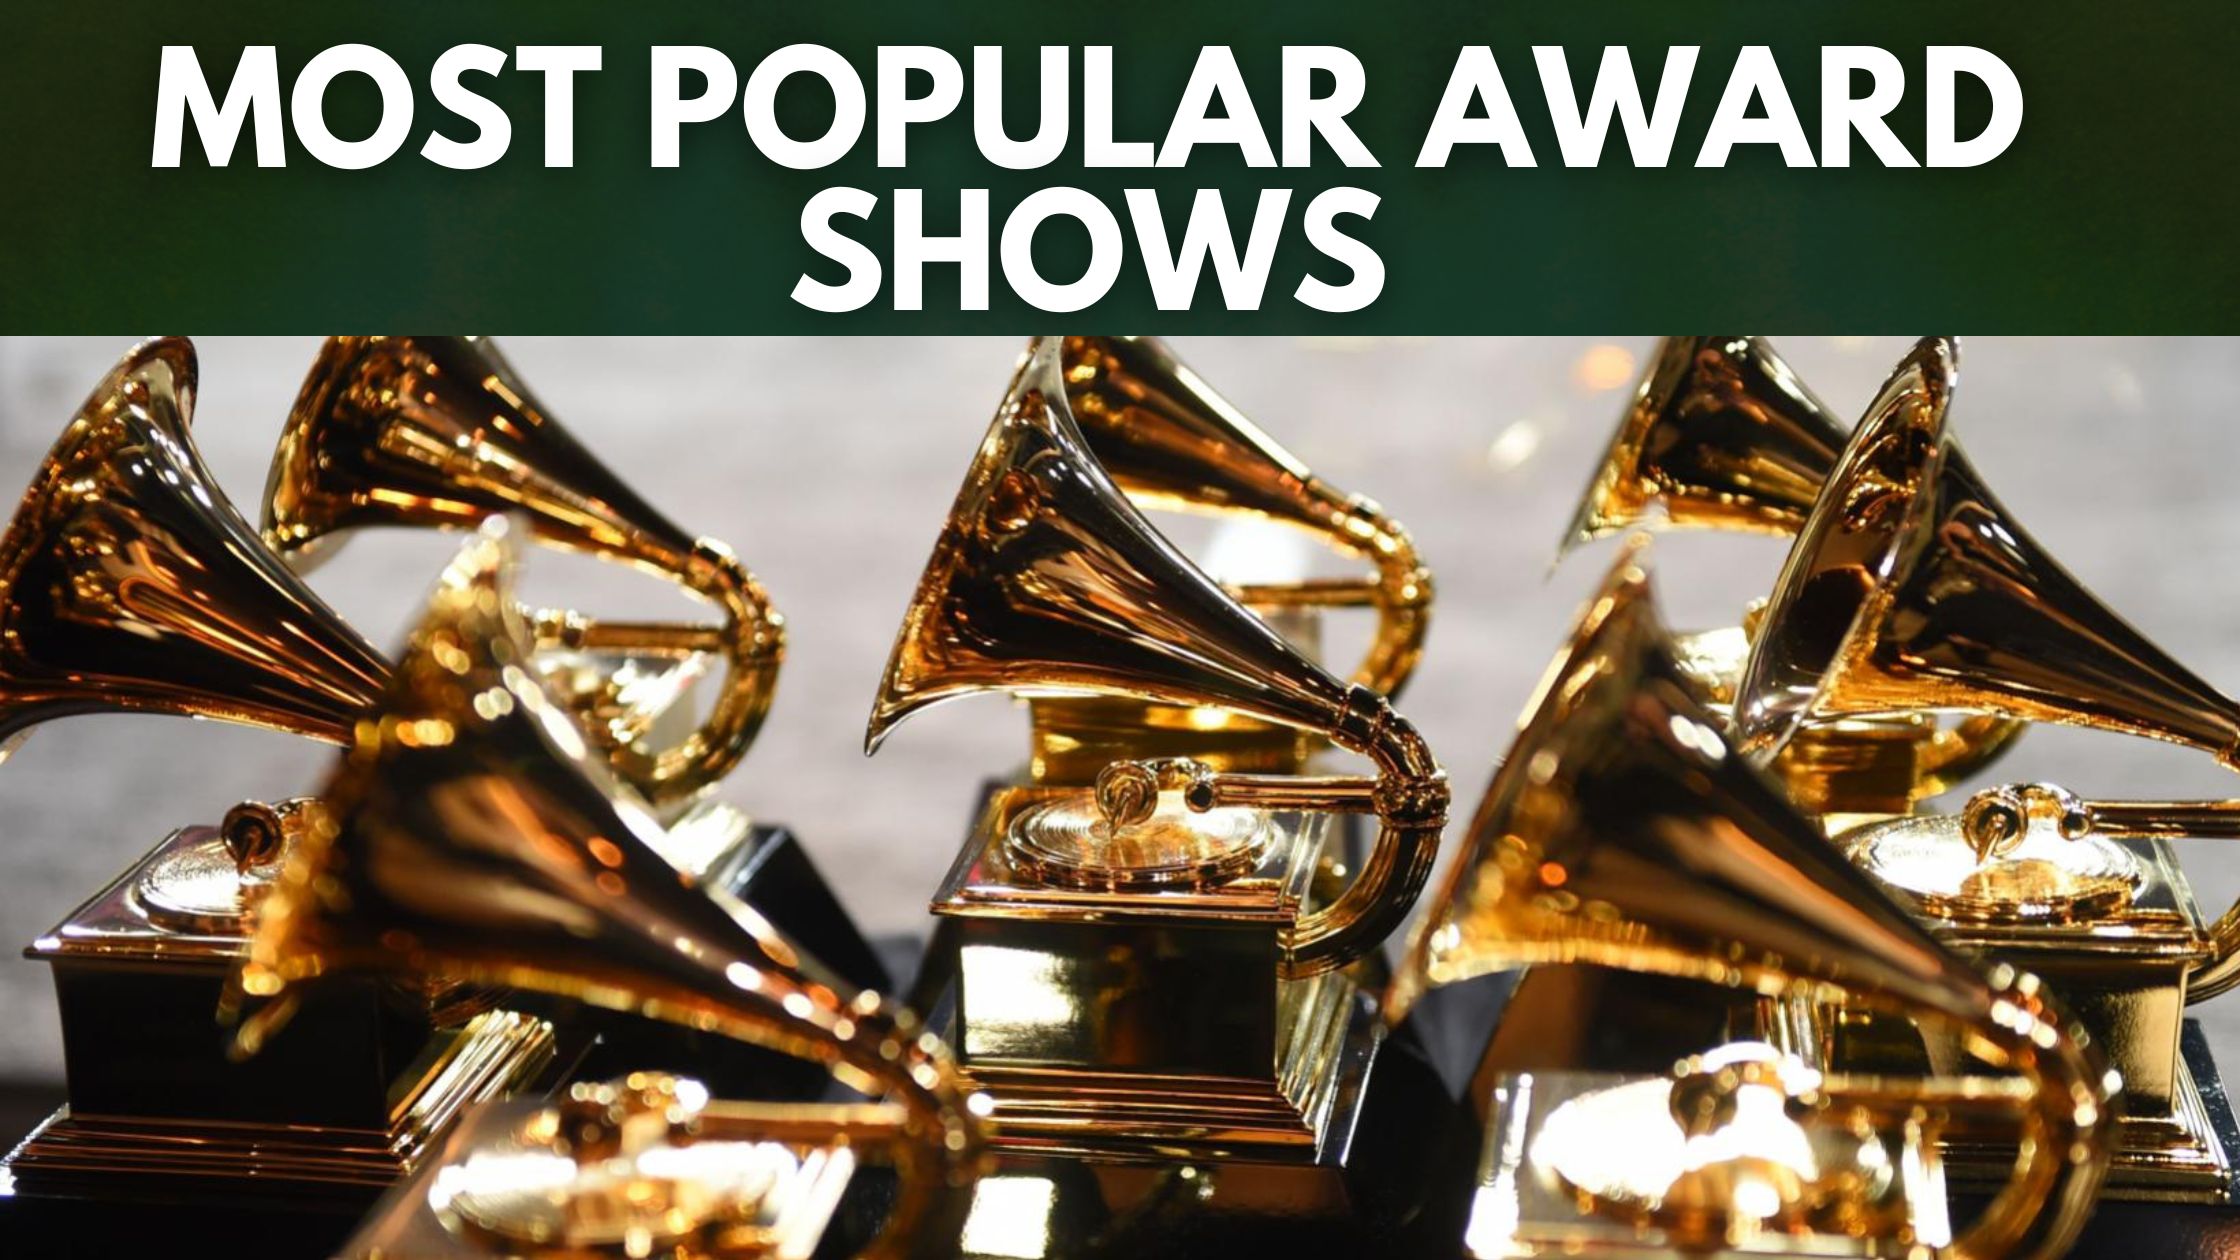 Top 5 Most Popular Award Shows